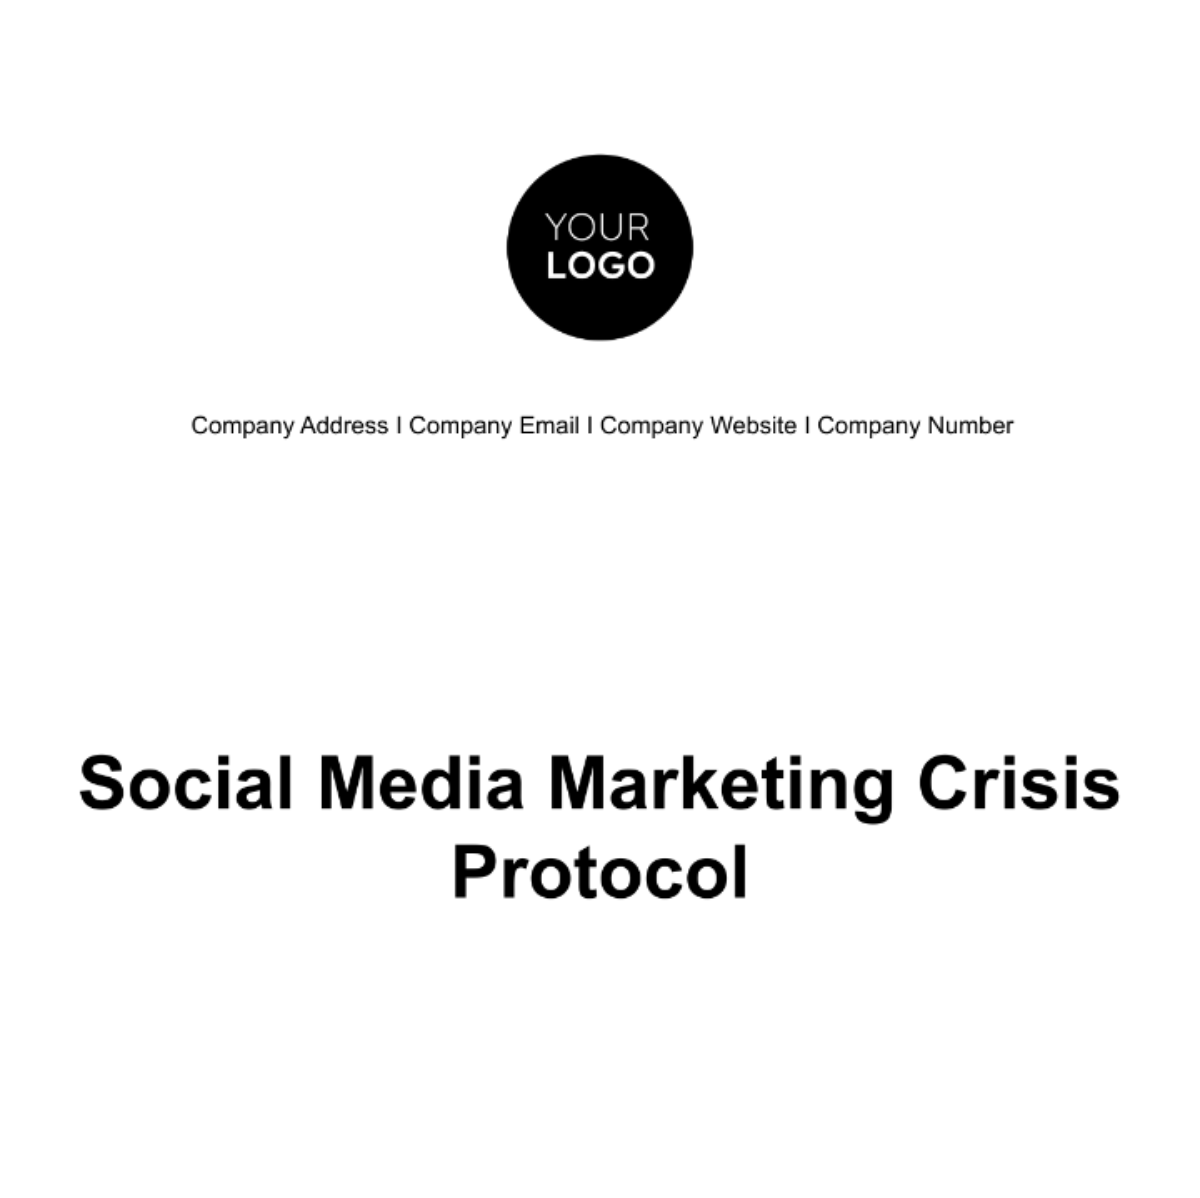 Social Media Marketing Crisis Protocol Template